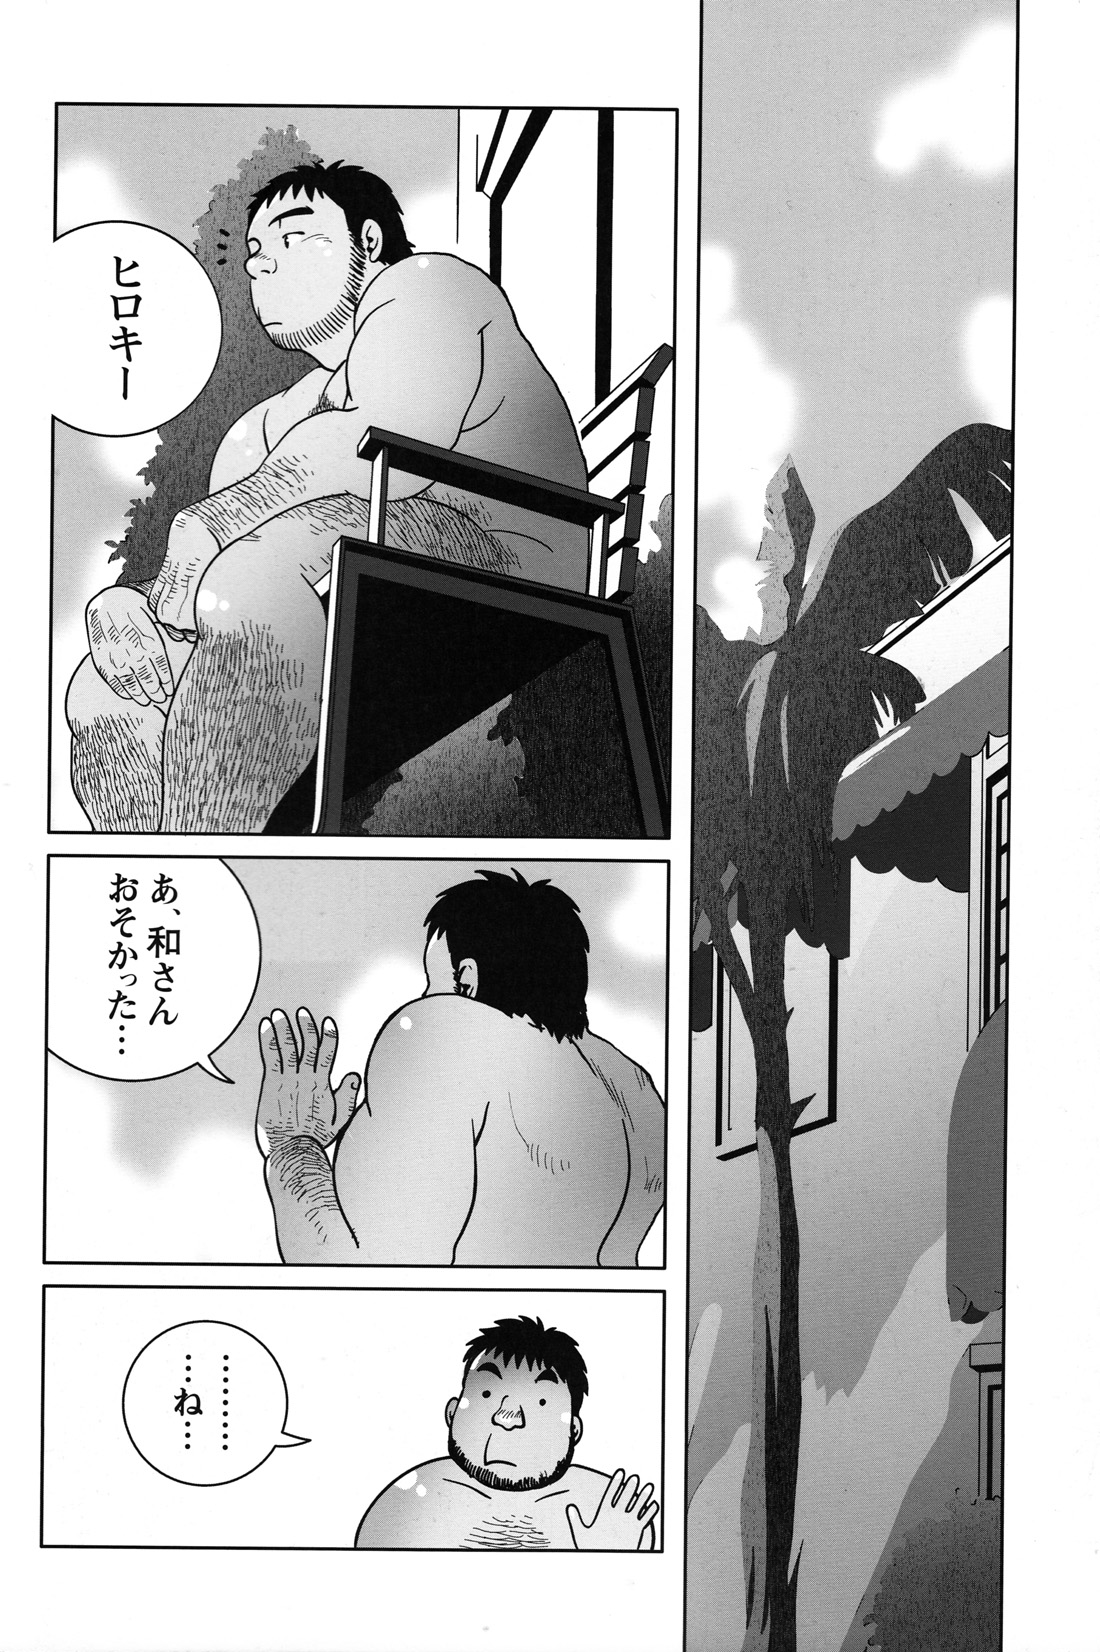 Comic G-men Gaho No.04 